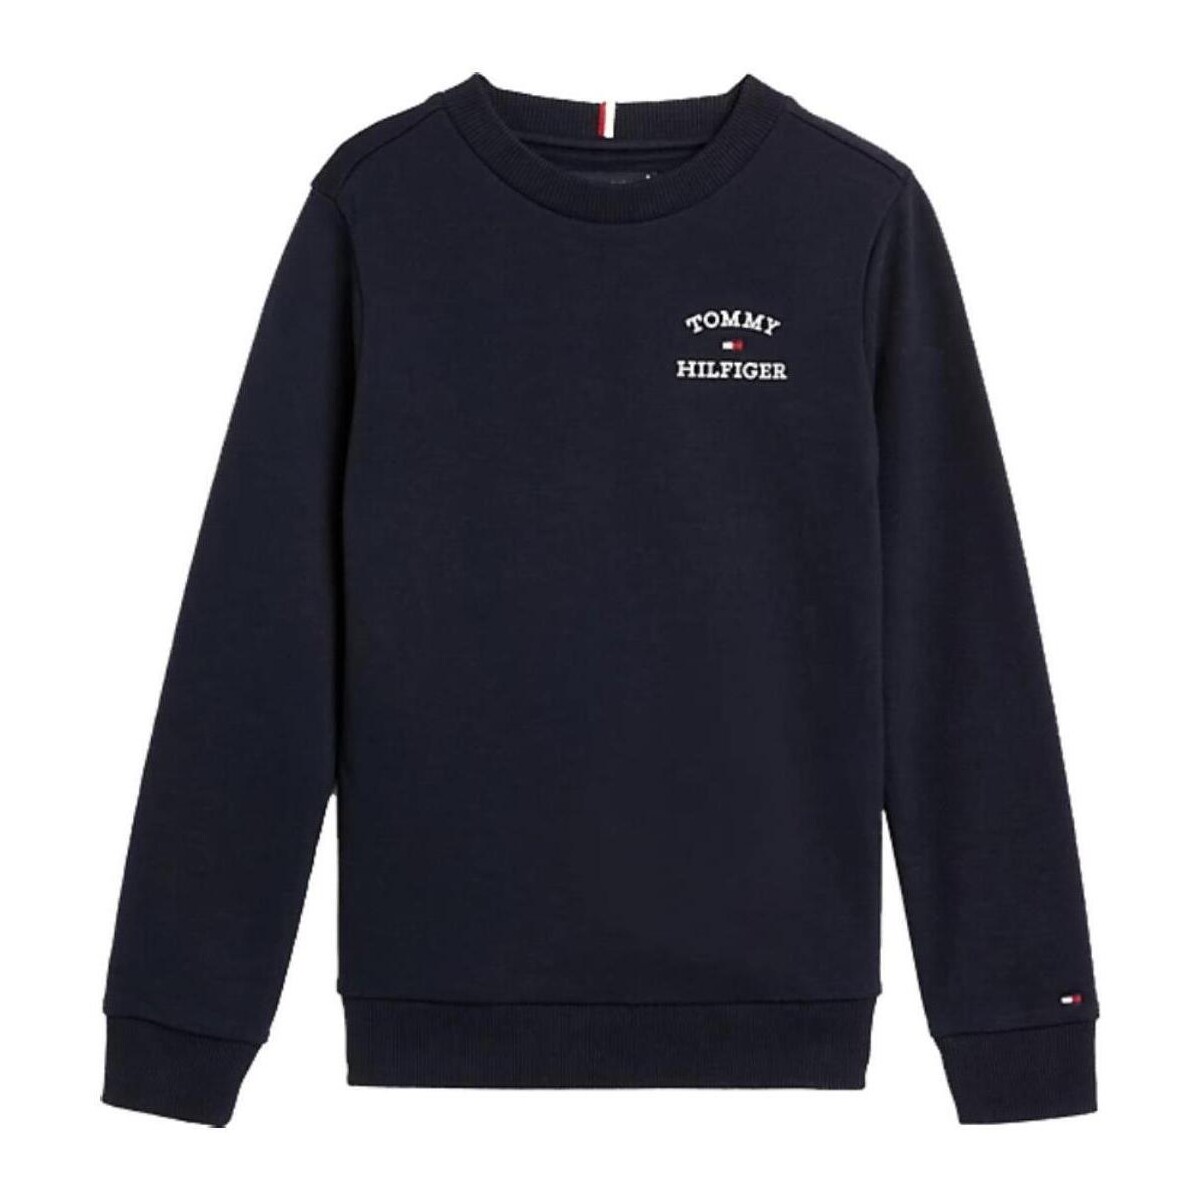 Textiel Jongens Sweaters / Sweatshirts Tommy Hilfiger  Blauw